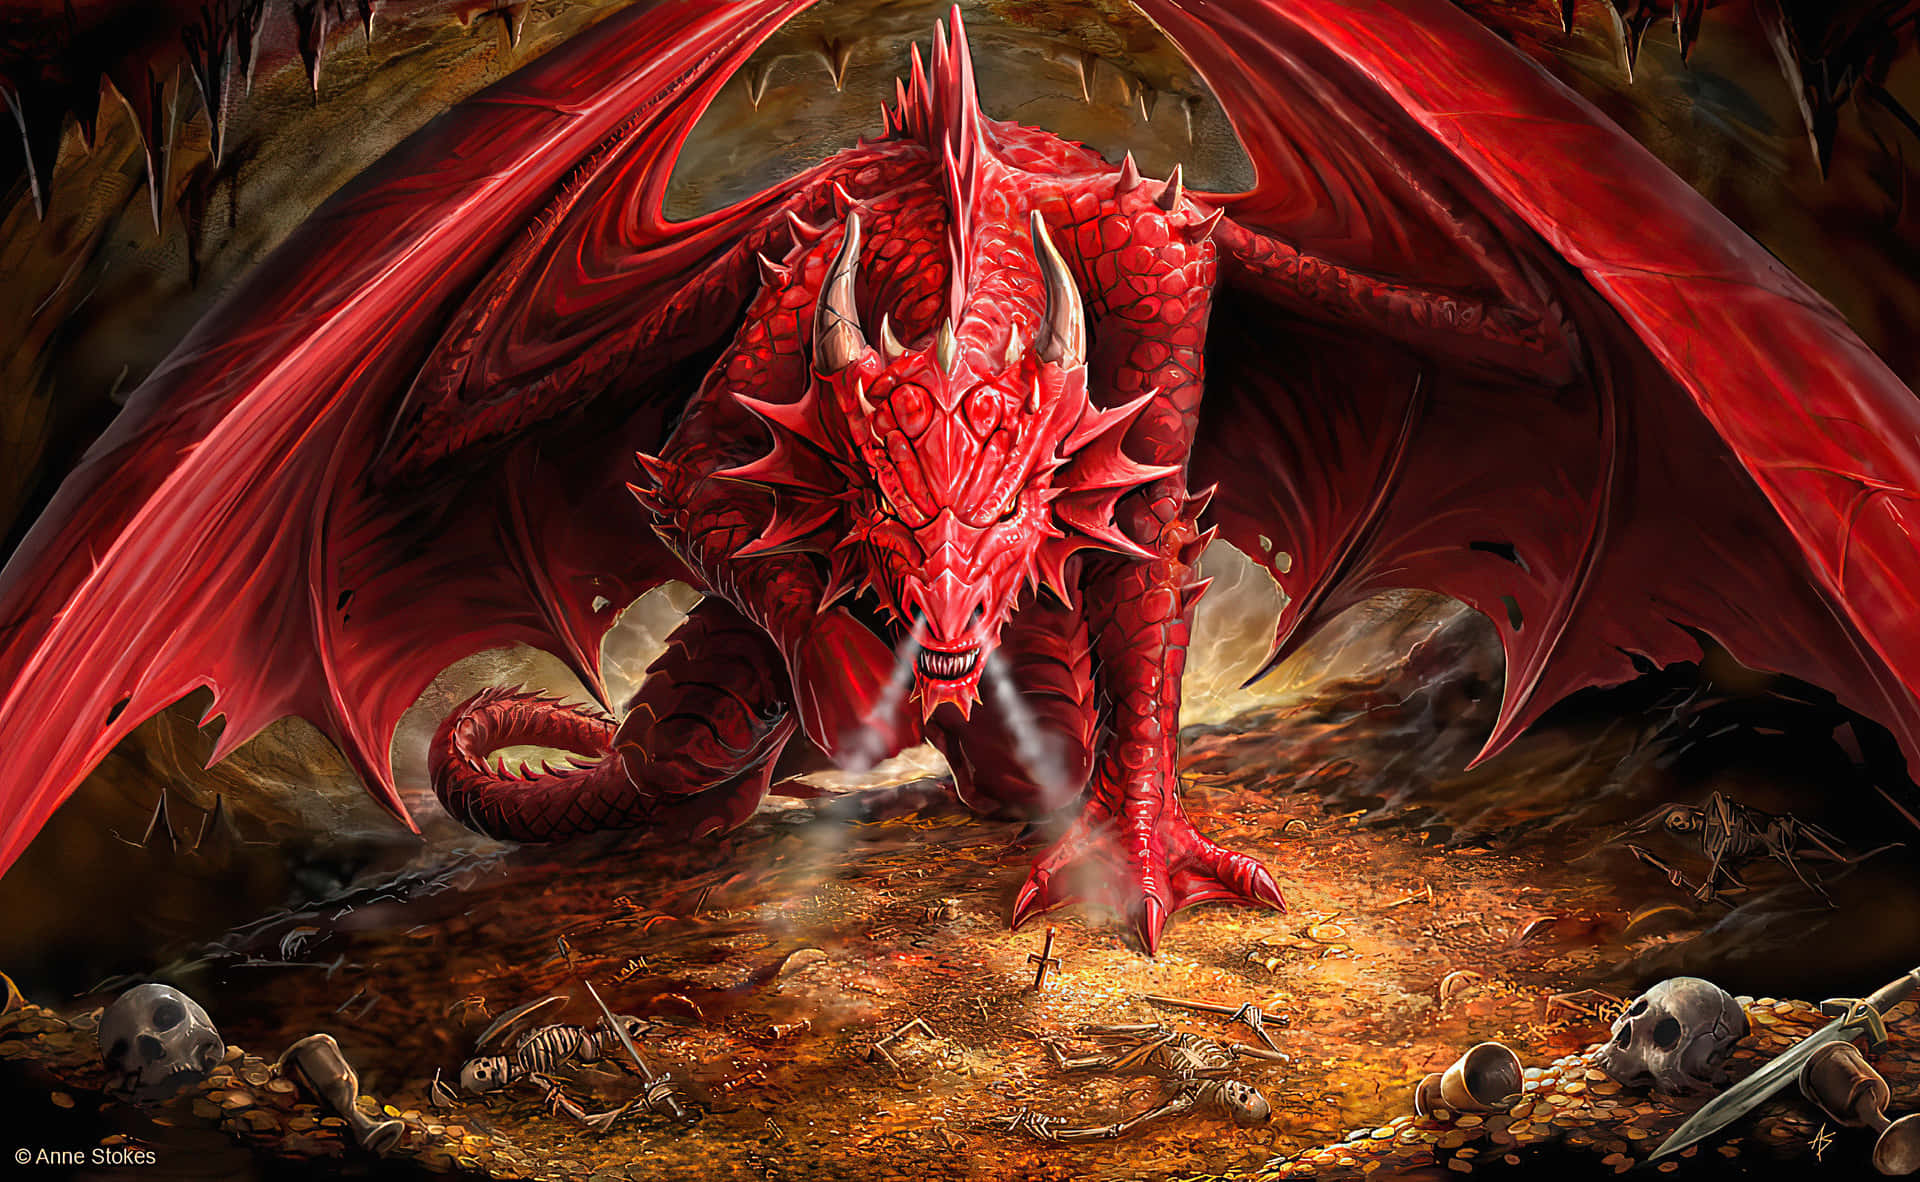 epic dragon wallpapers hd